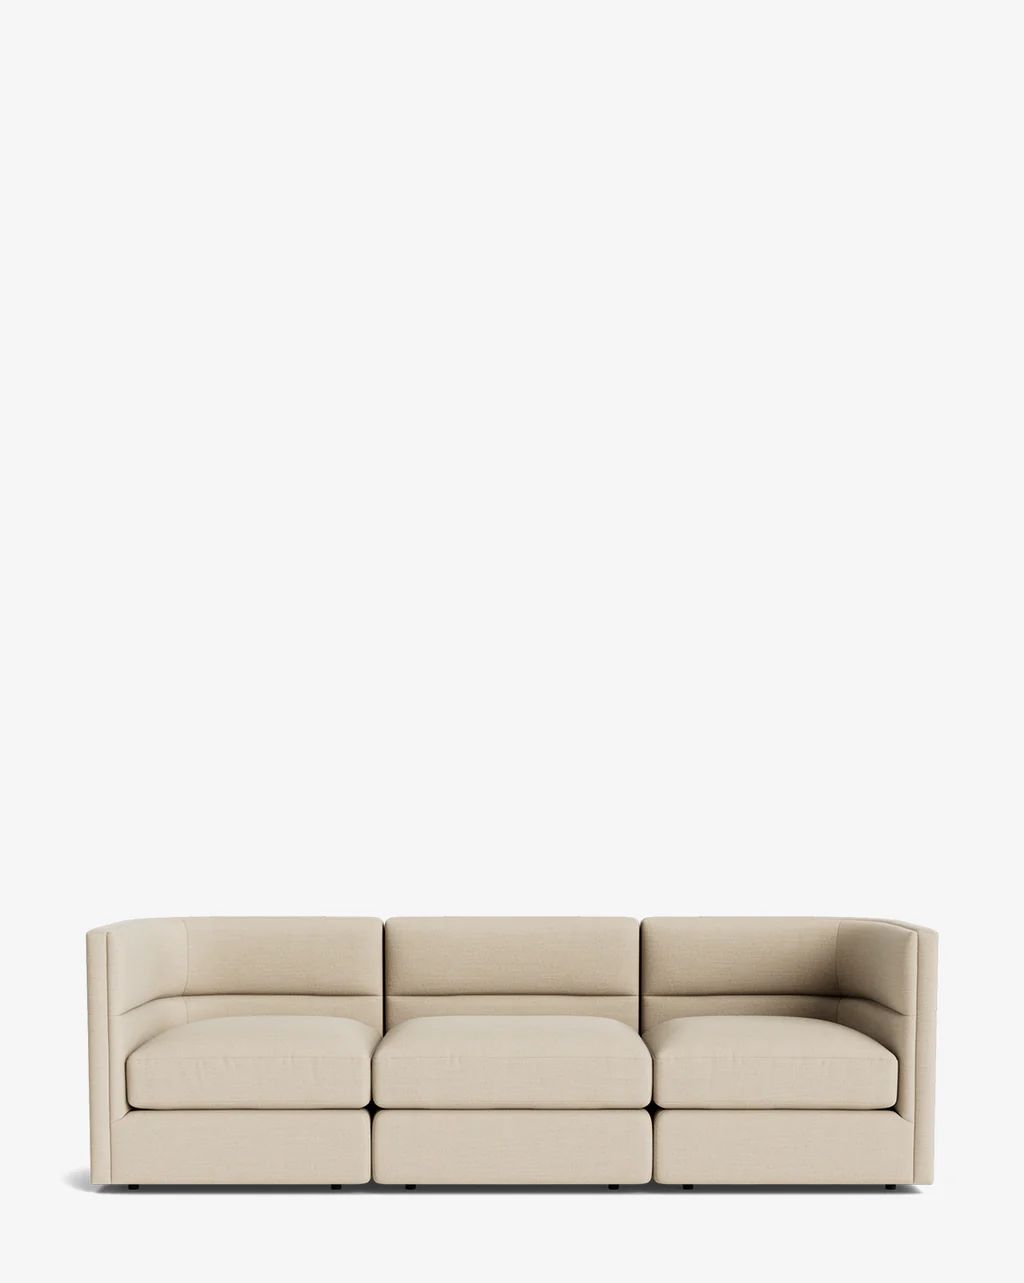 Claremont Modular Sofa | McGee & Co.